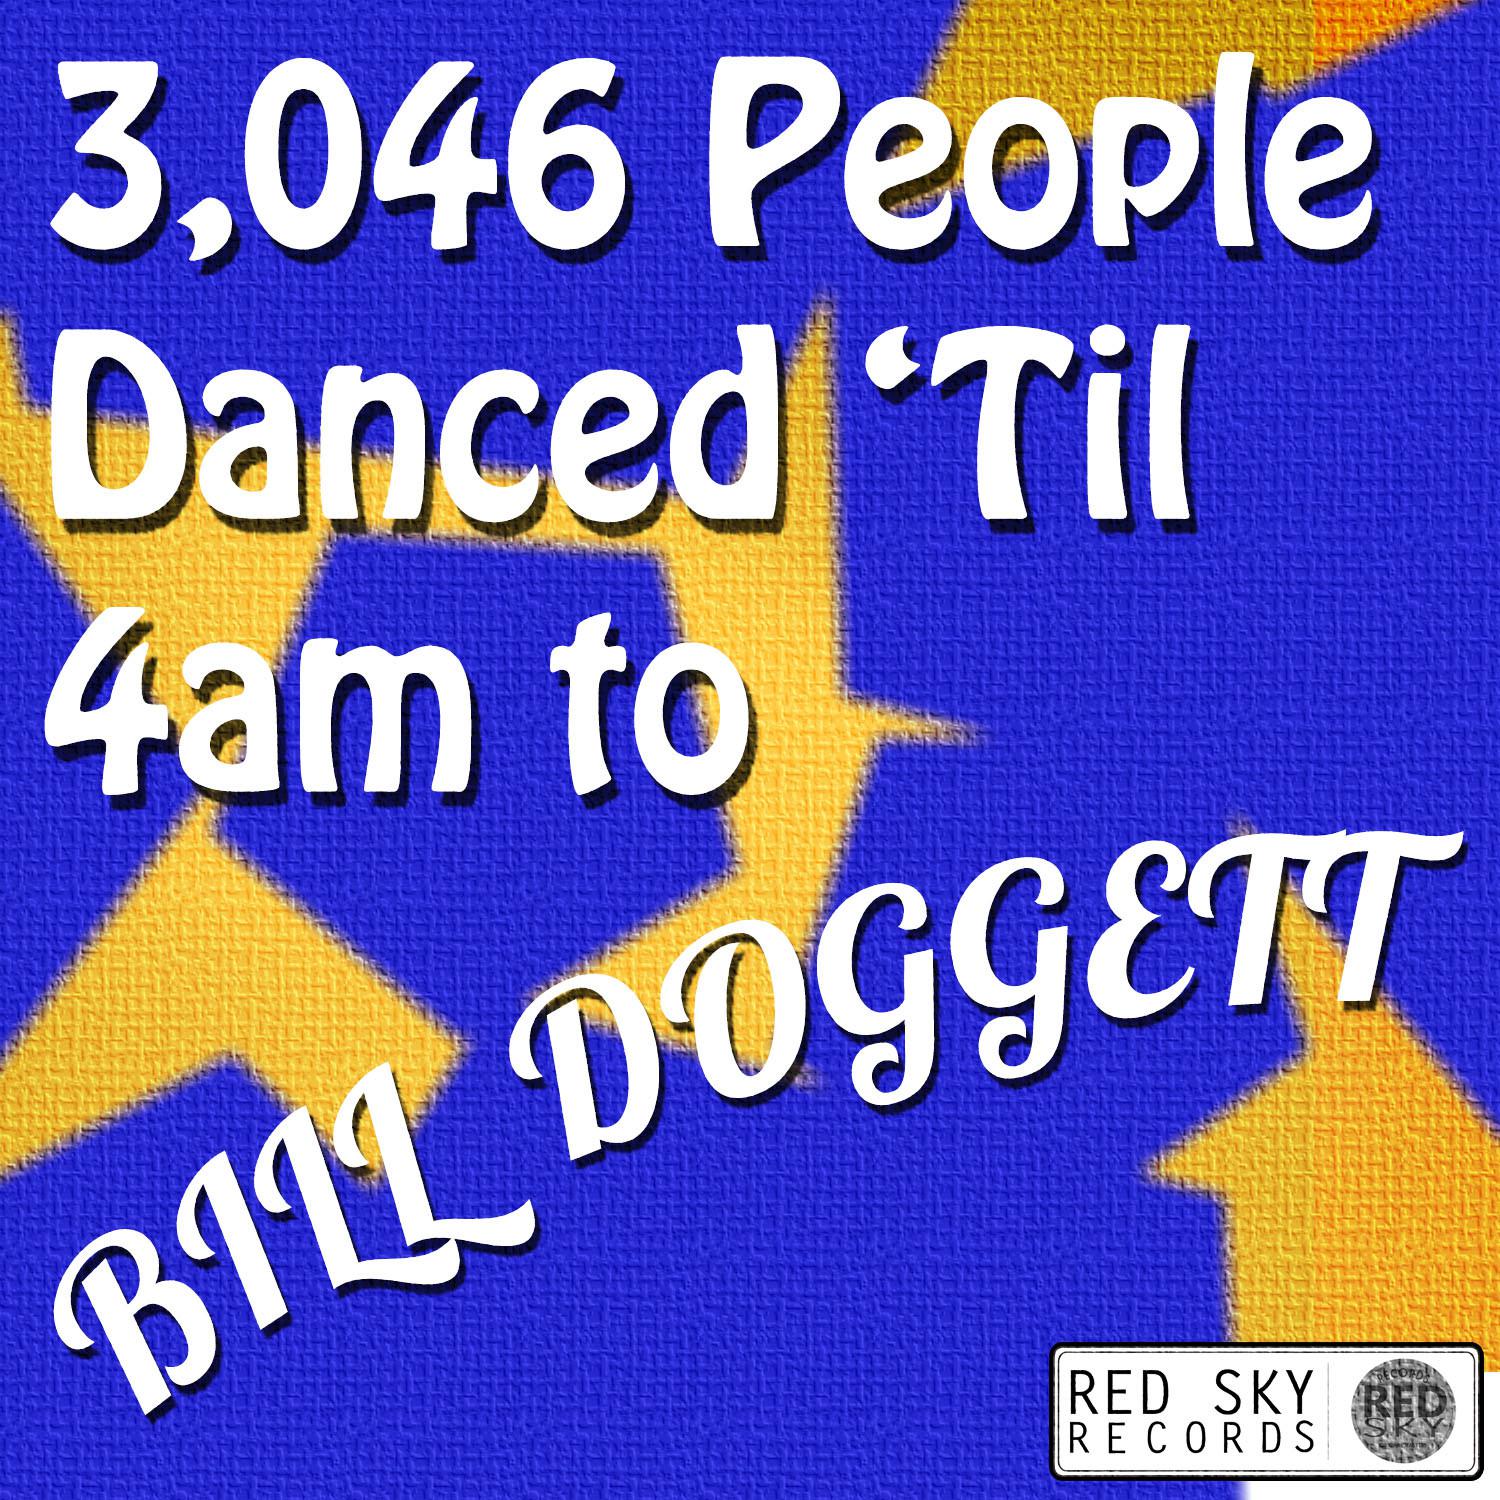 3,046 People Danced 'Til 4am to Bill Doggett